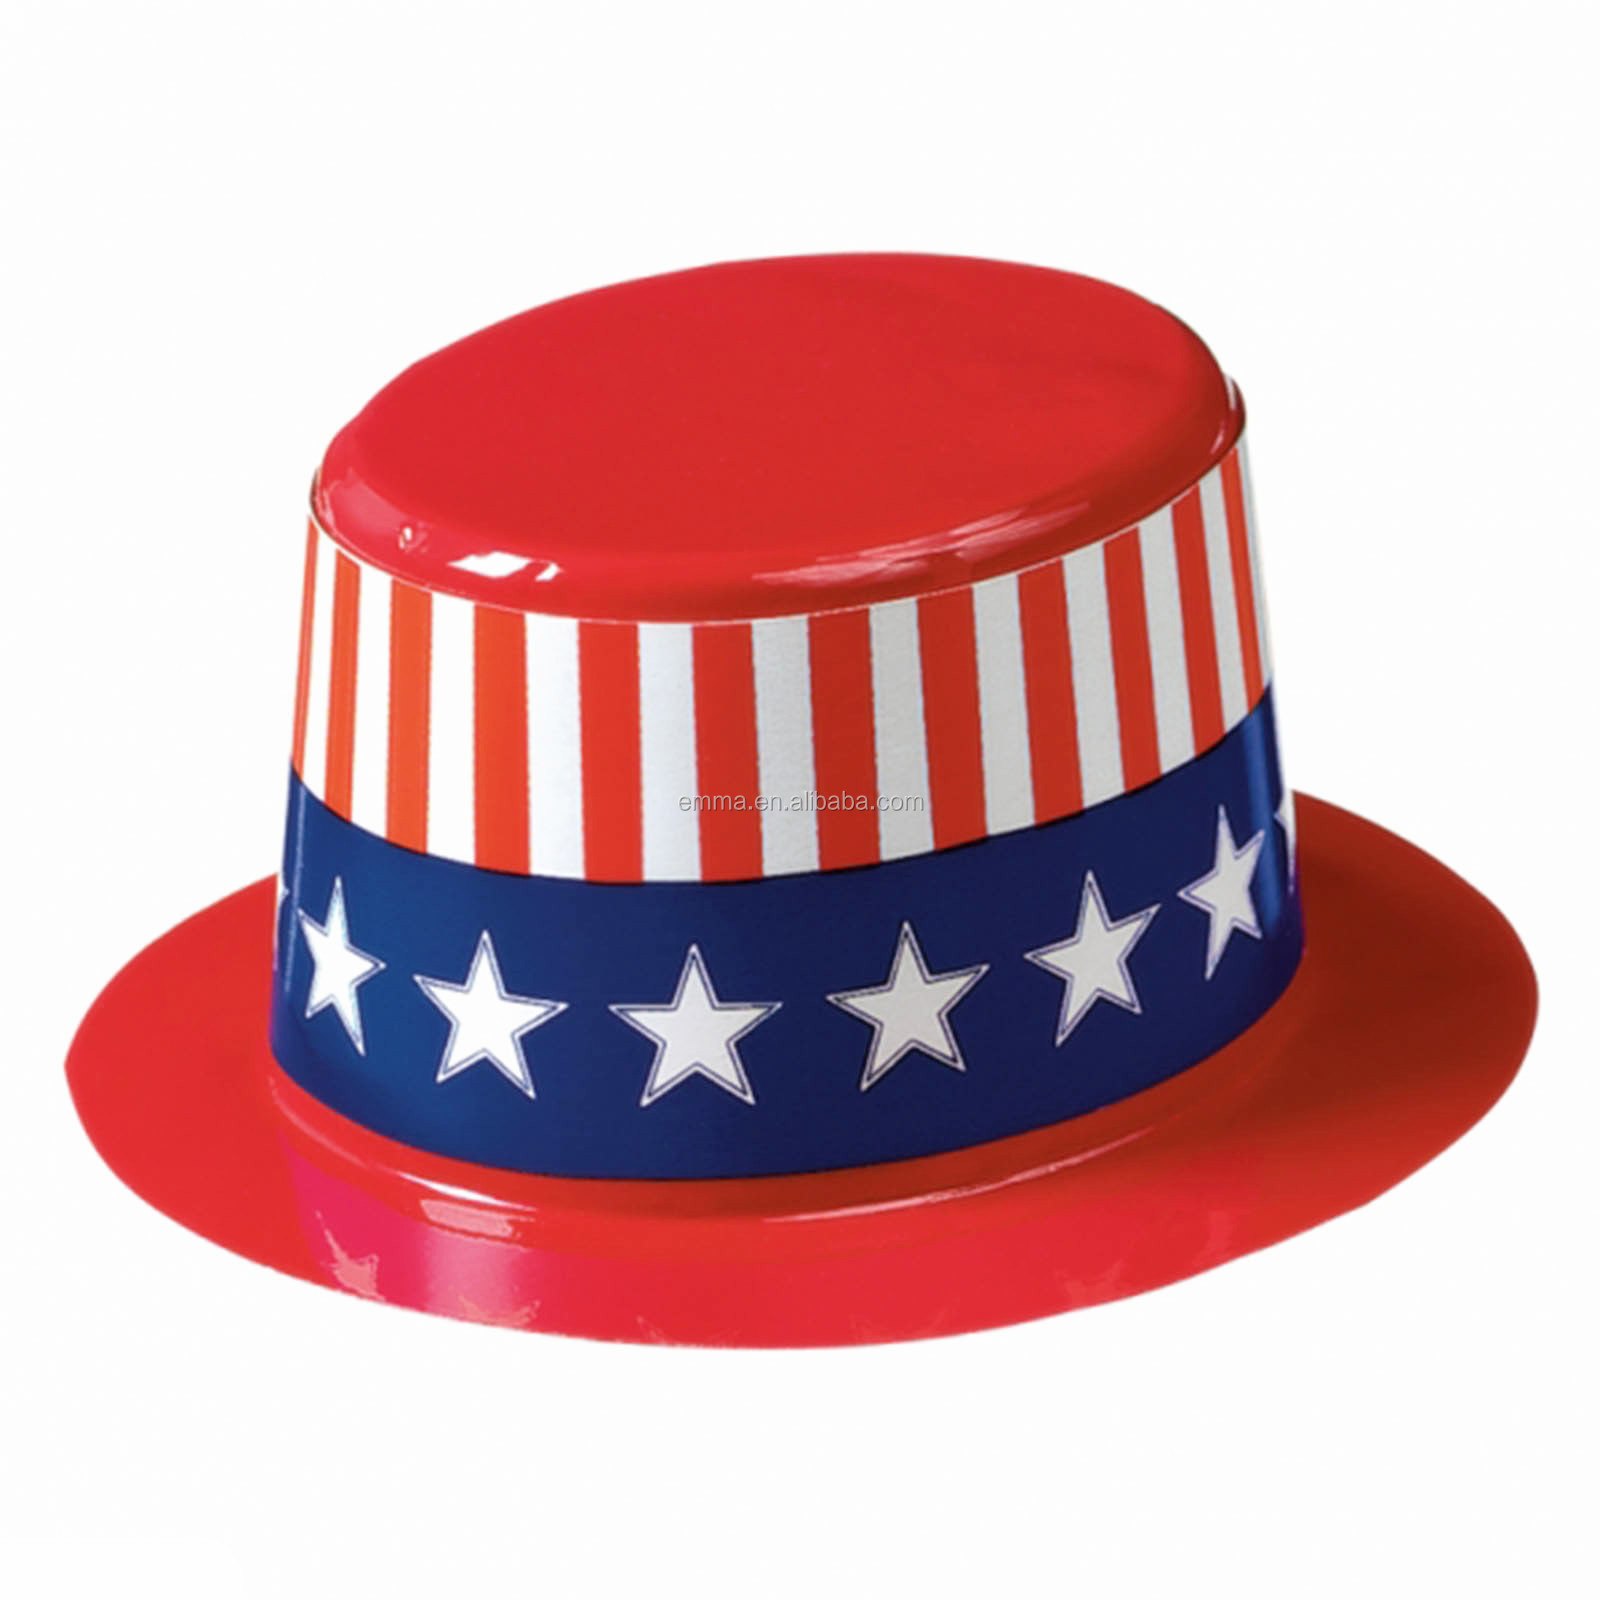 Шляпы Америка 1600. American Top hat. Шляпа америка